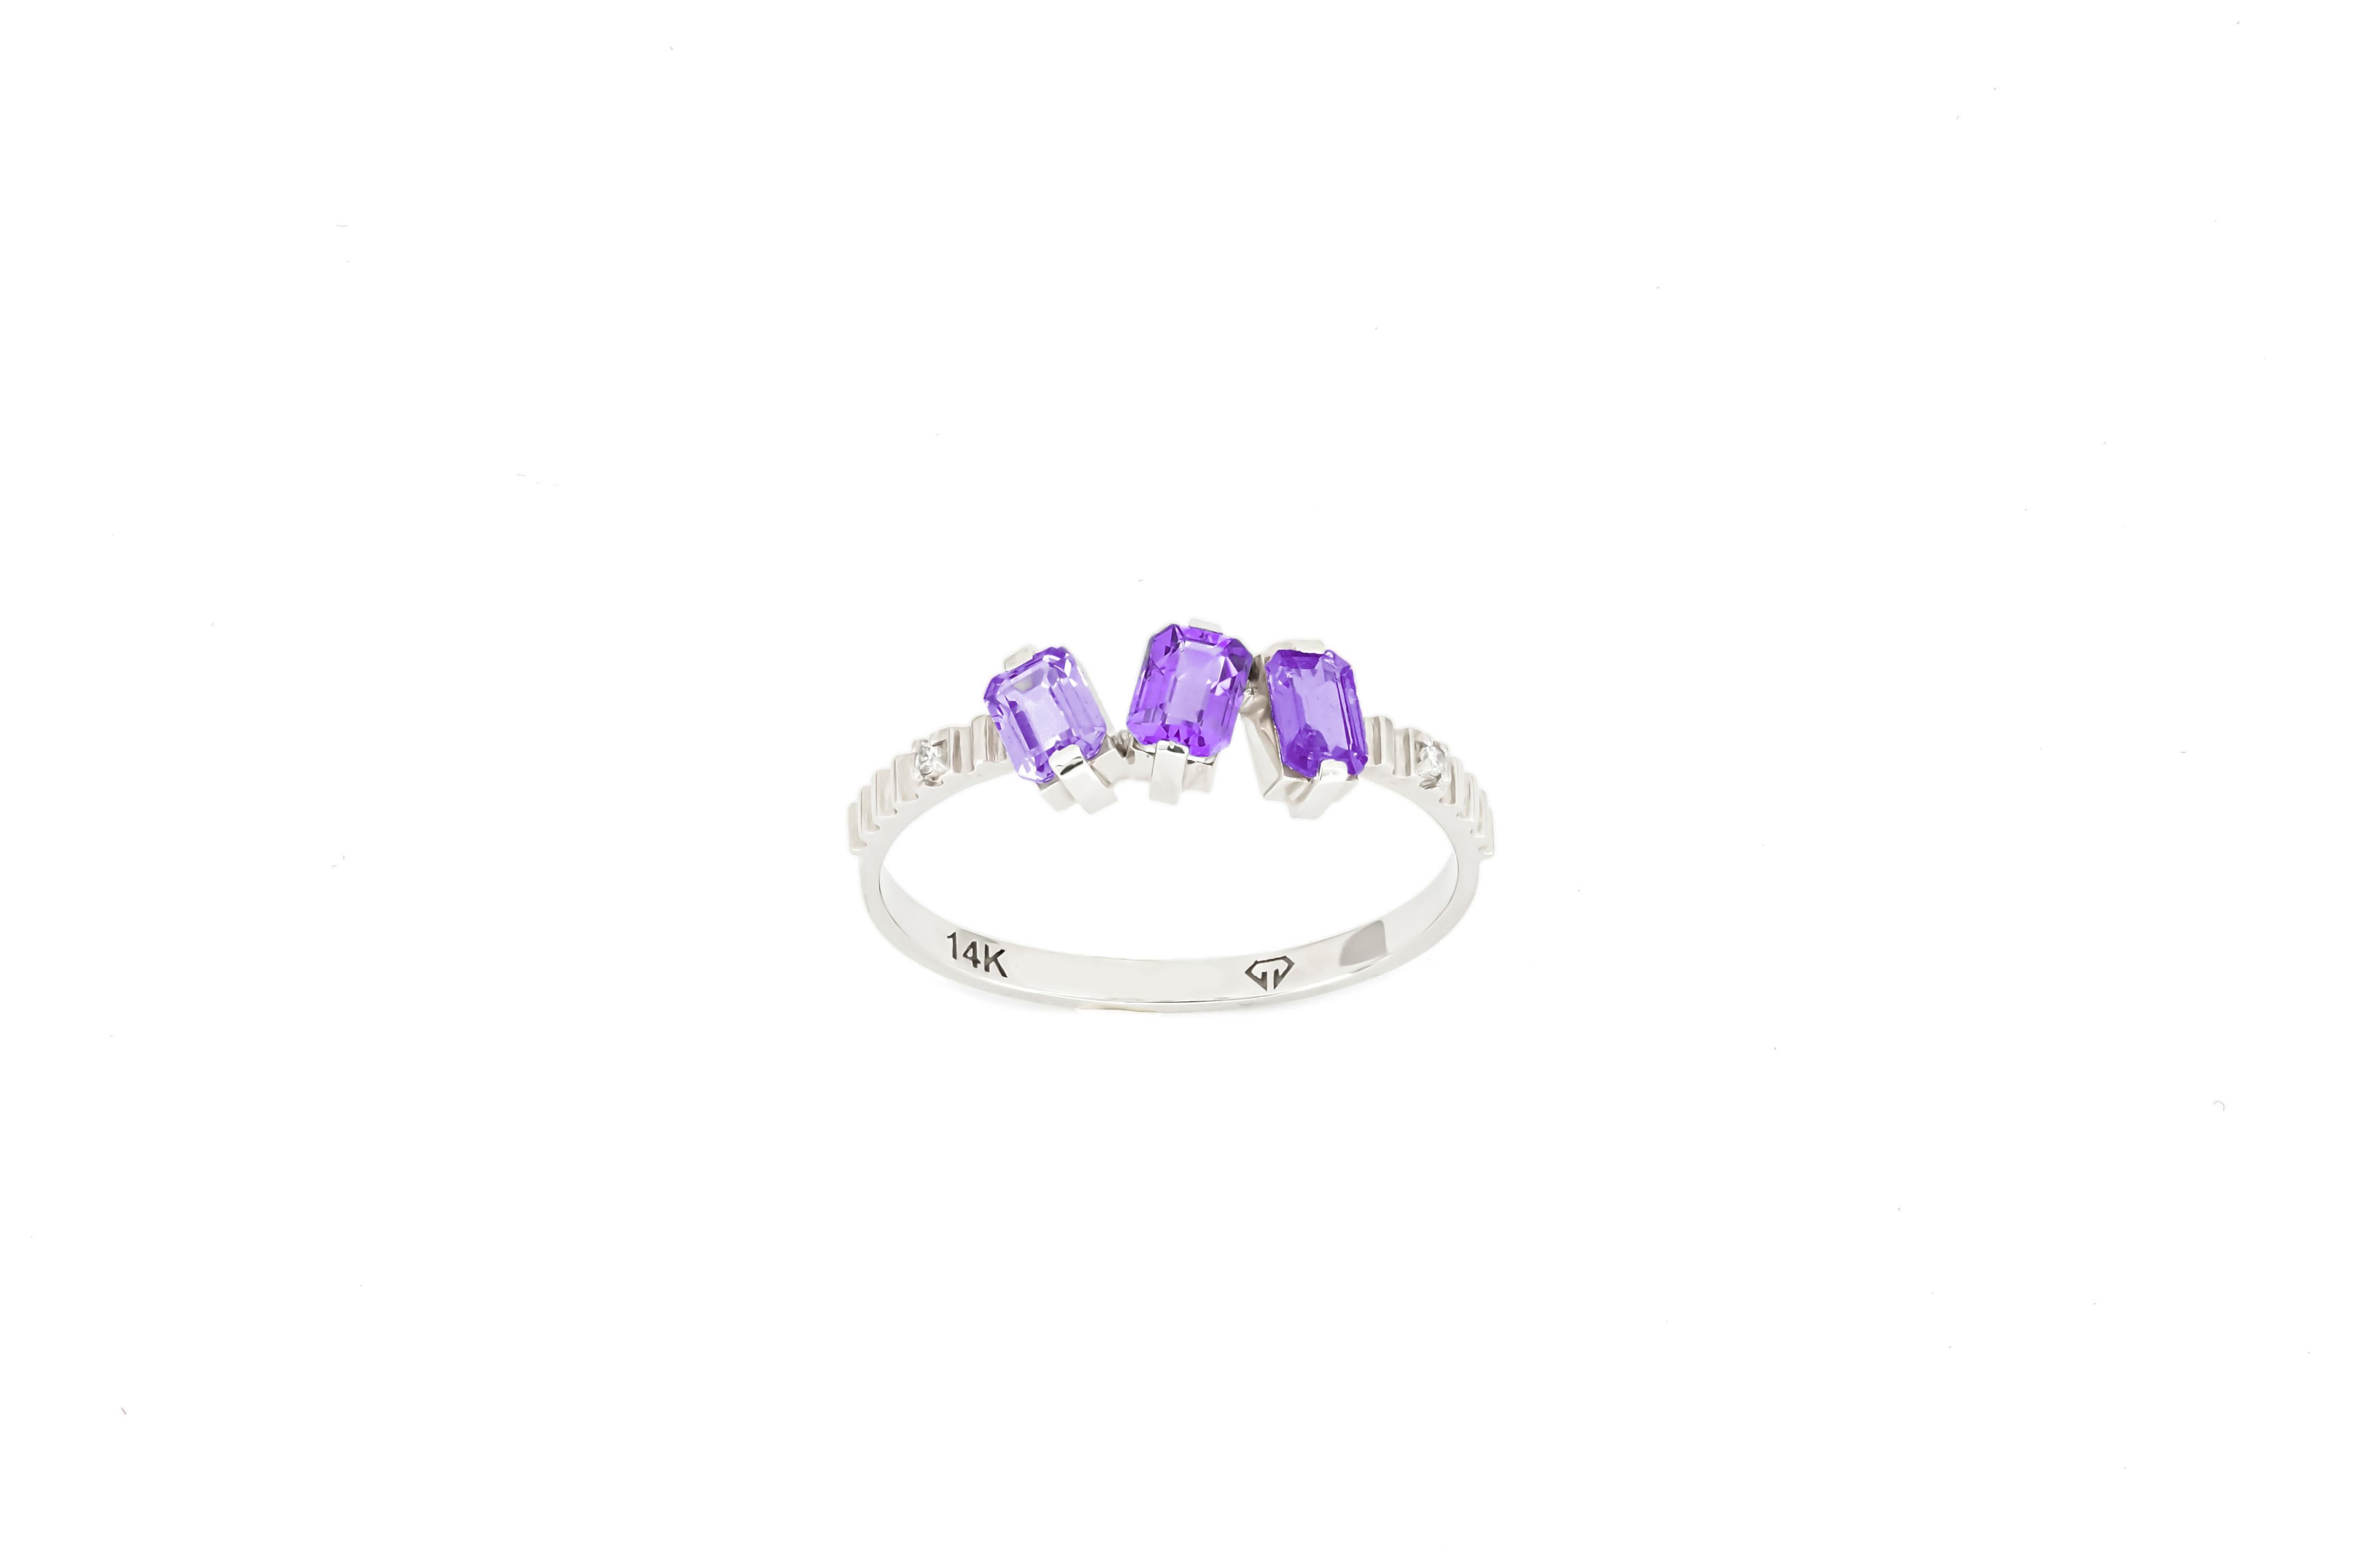 For Sale:  Monochrome purple gemstone 14k ring.  5